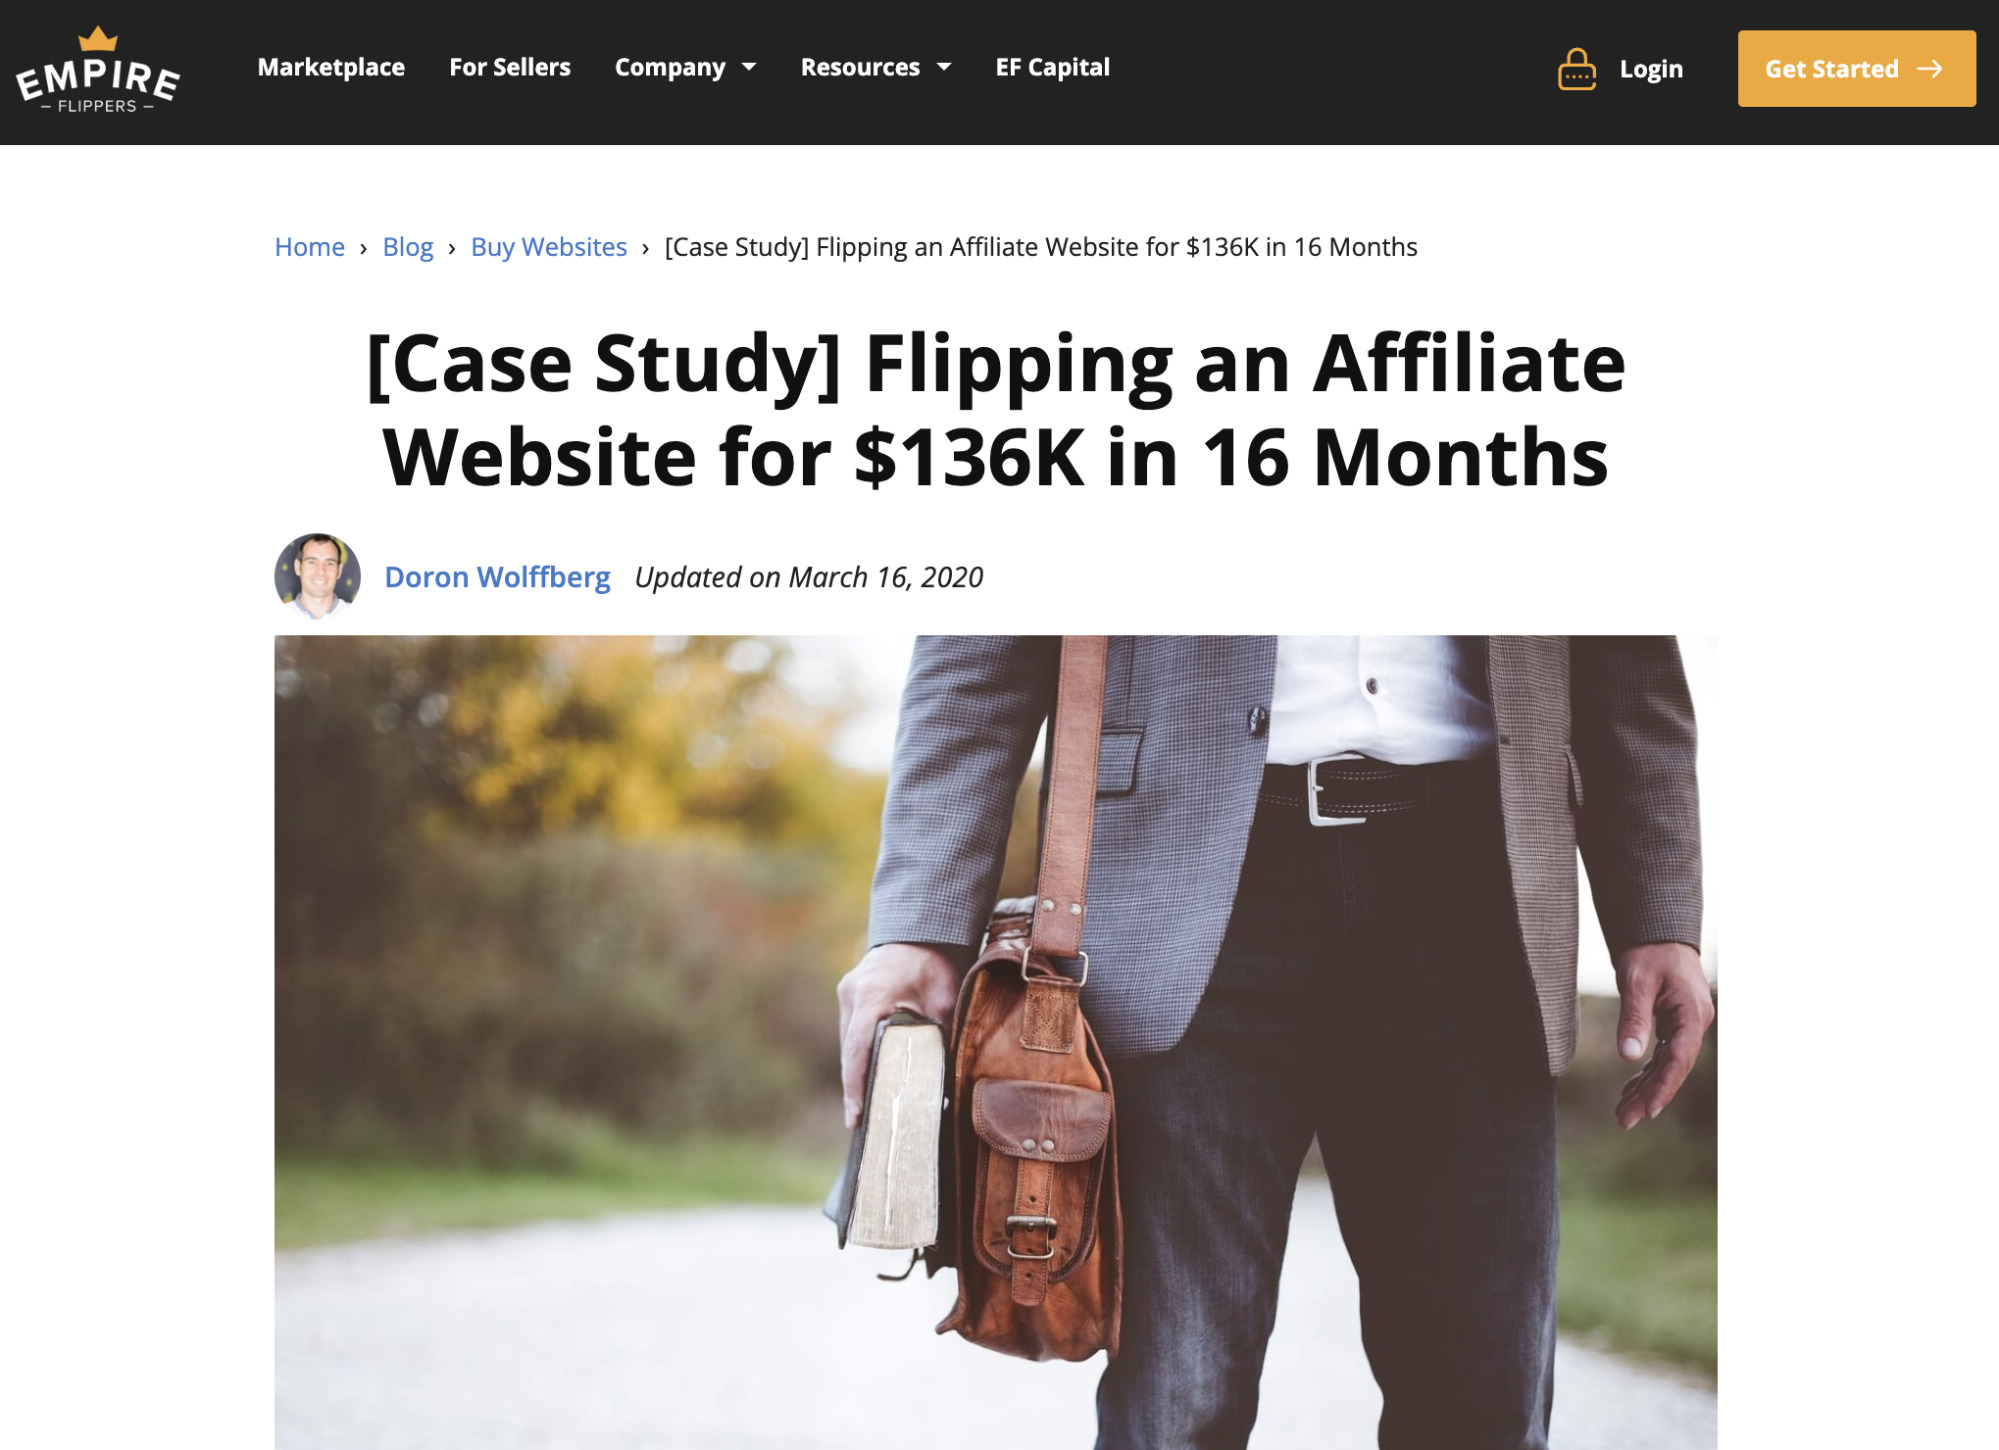 Website flipping case study, via Empire Flippers